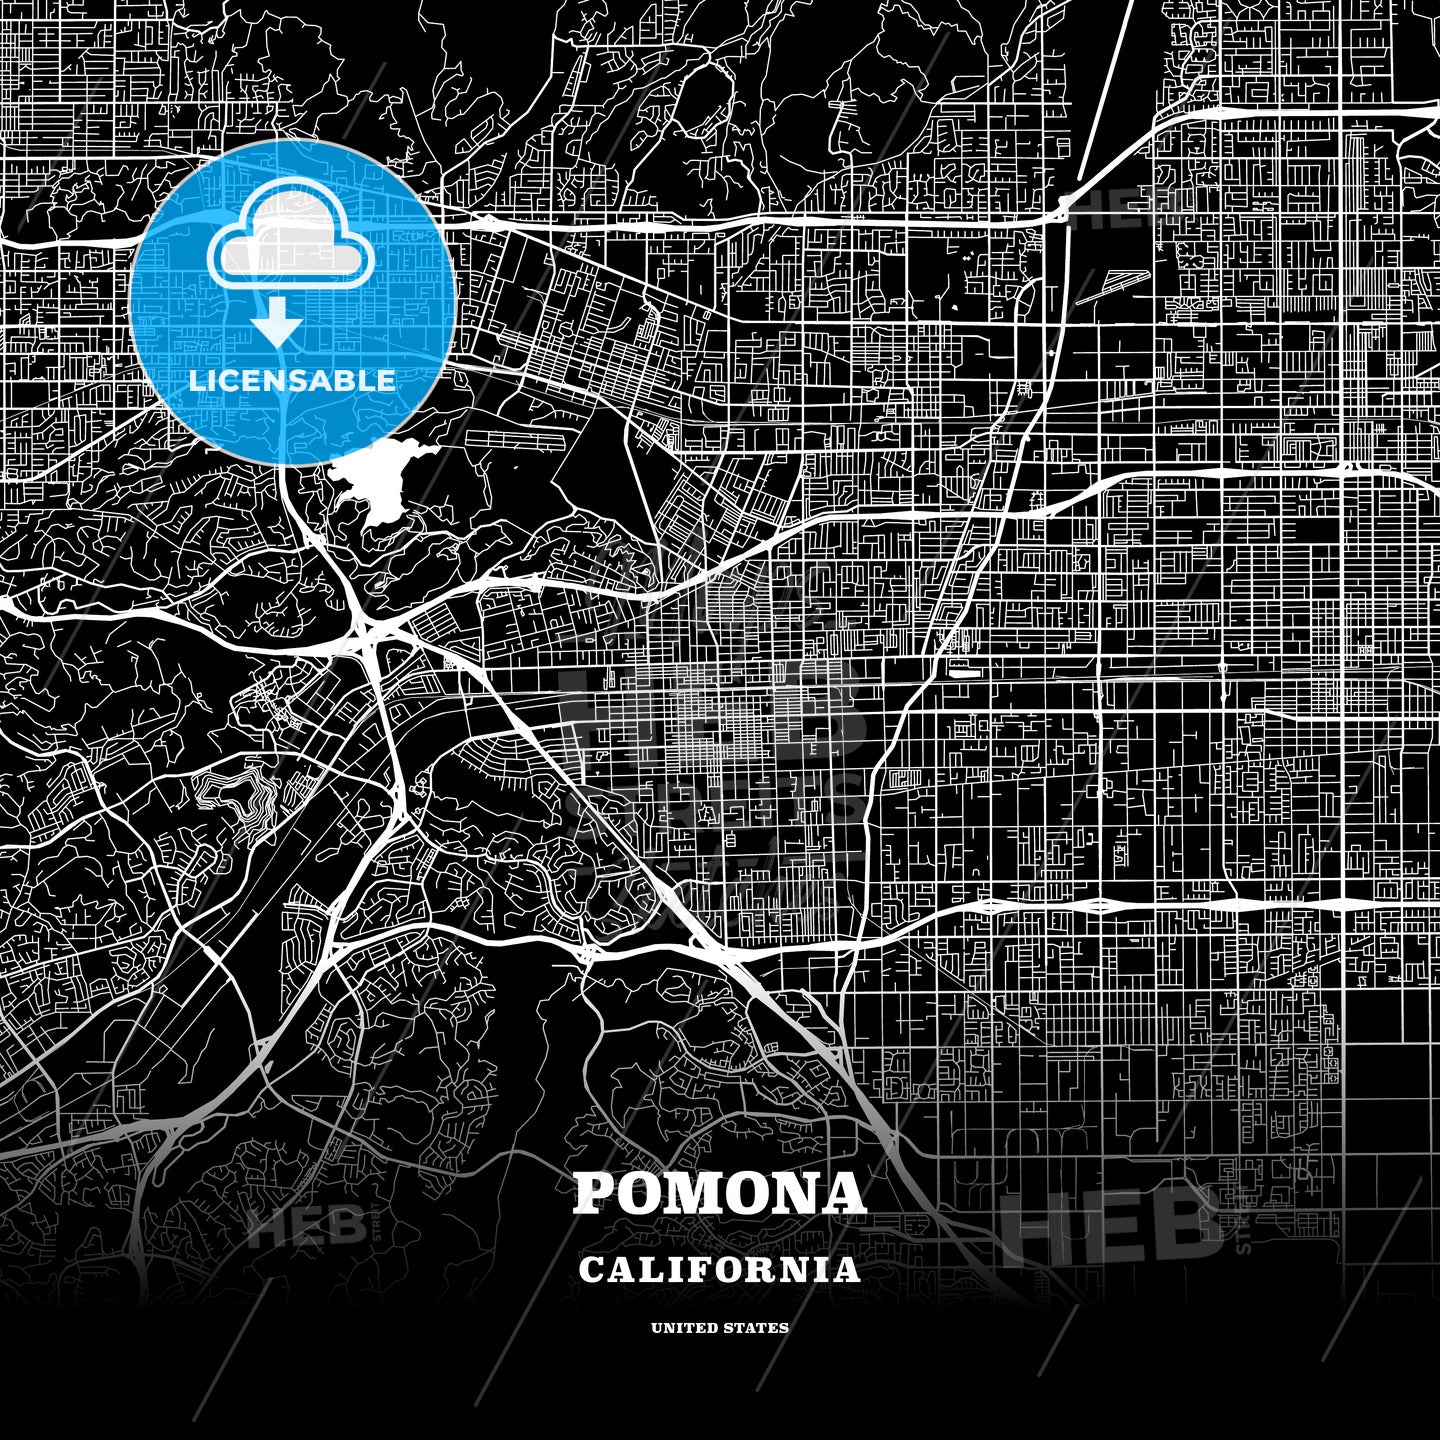 Pomona, California, USA map